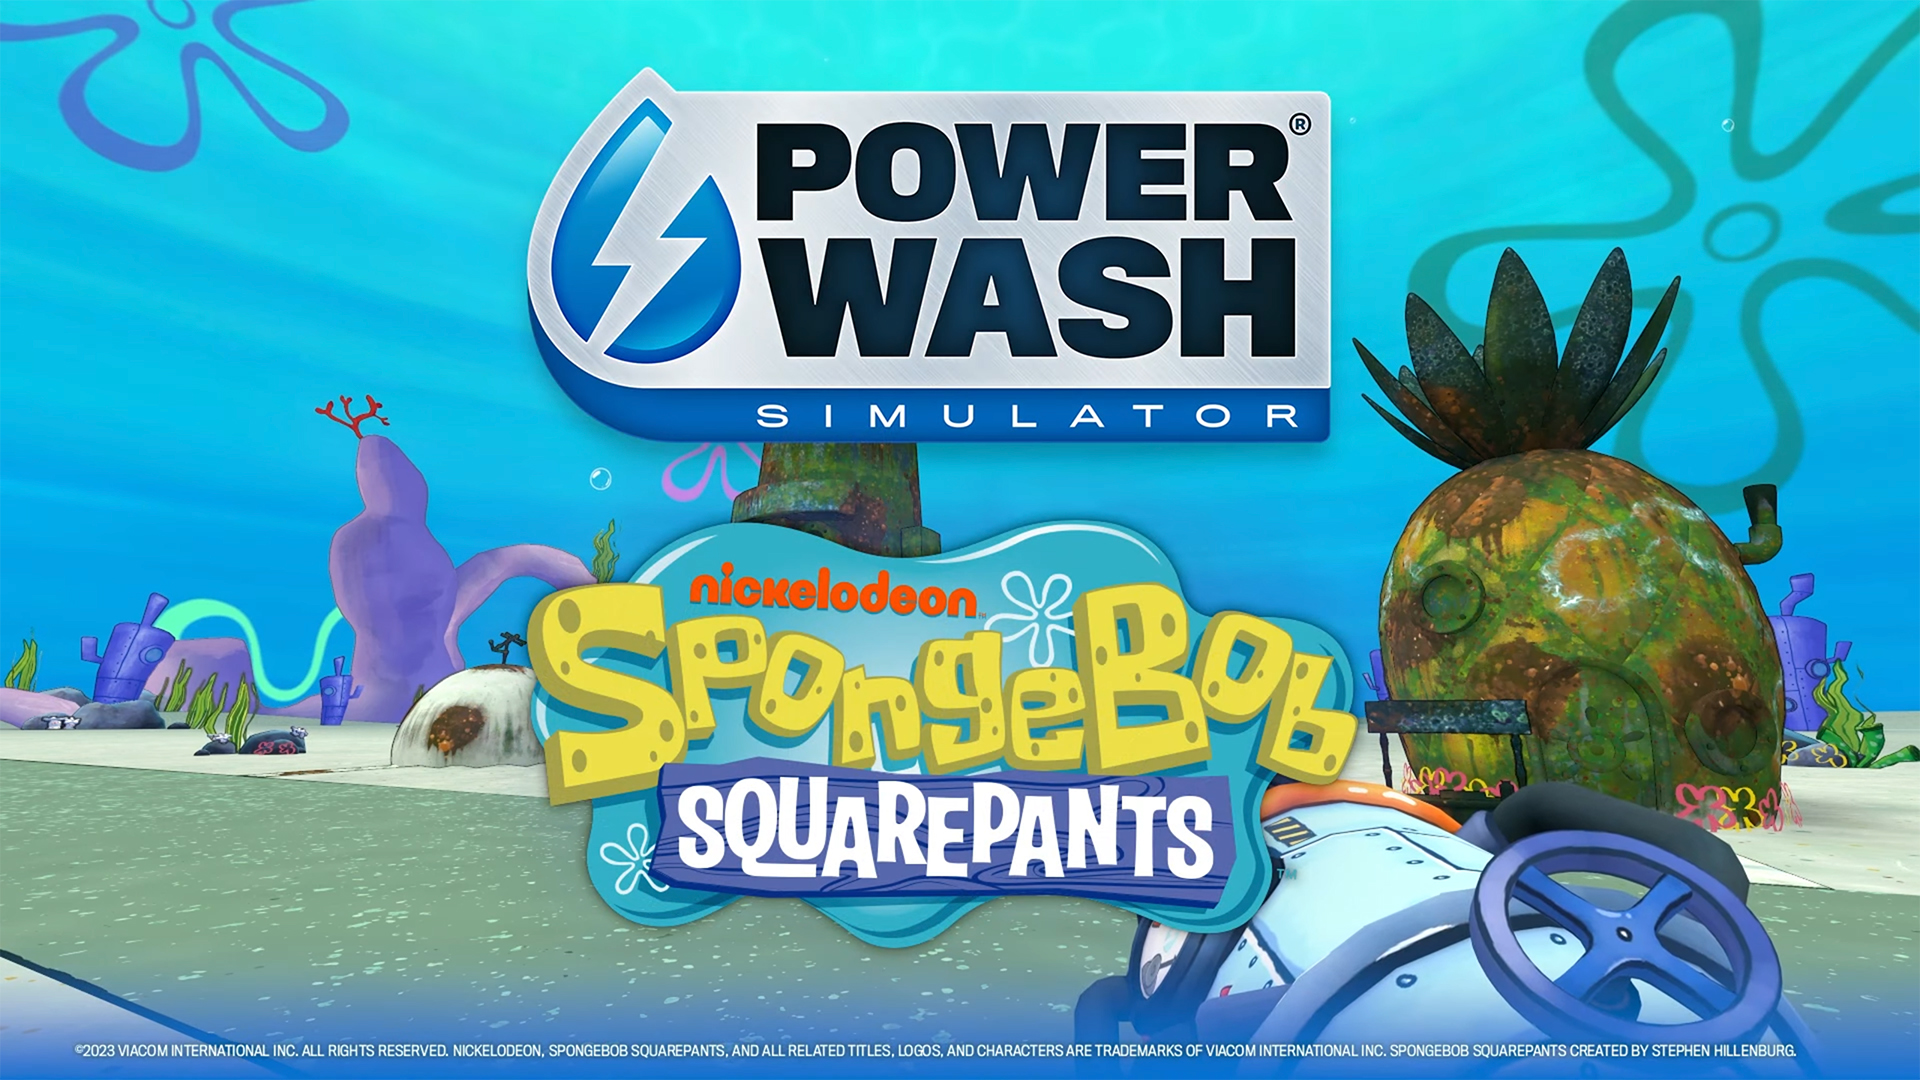 A screenshot from the teaser trailer for PowerWash Simulator's SpongeBob SquarePants Special Pack DLC.